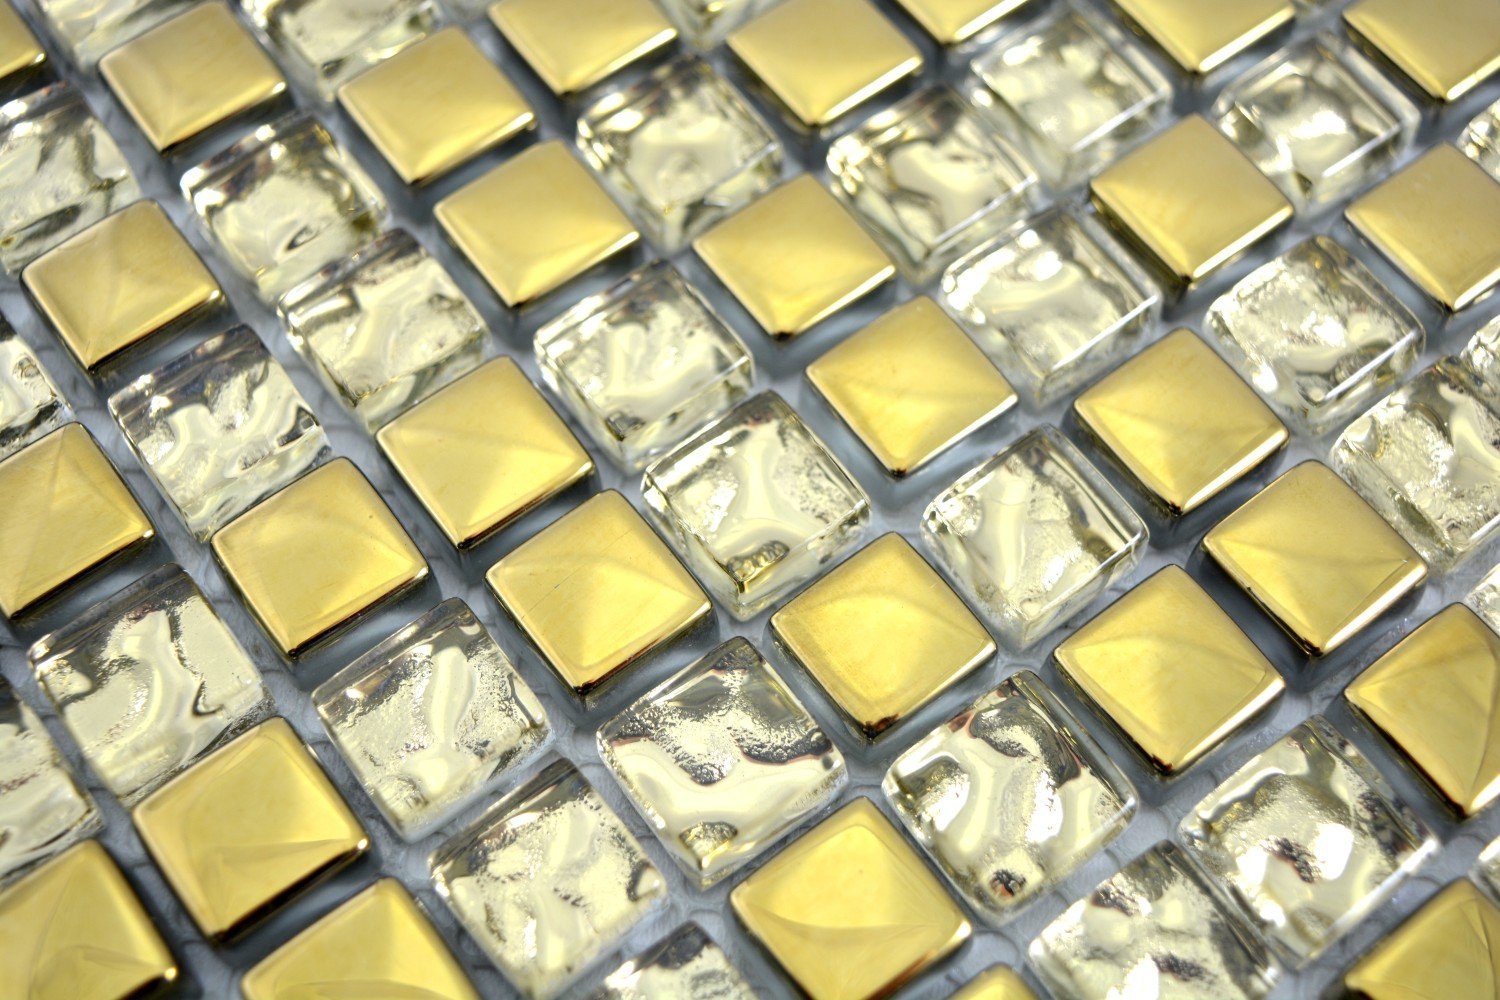 Mosani Mosaikfliesen Glasmosaik 10 Matten Crystal Mosaikfliesen gold / glänzend